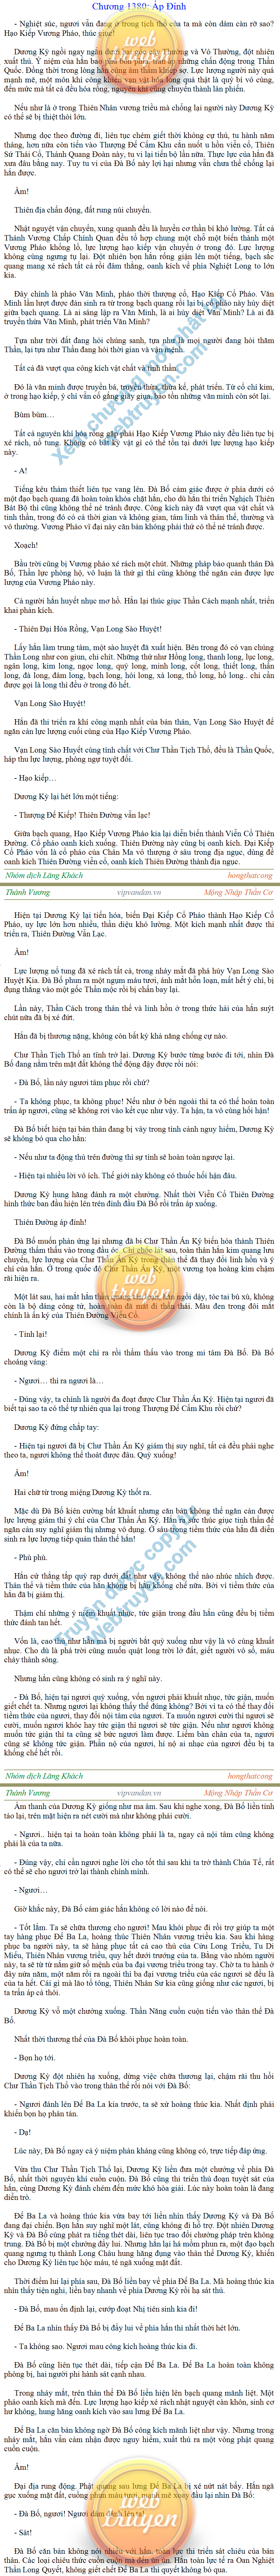 Thanh-vuong-1380.png